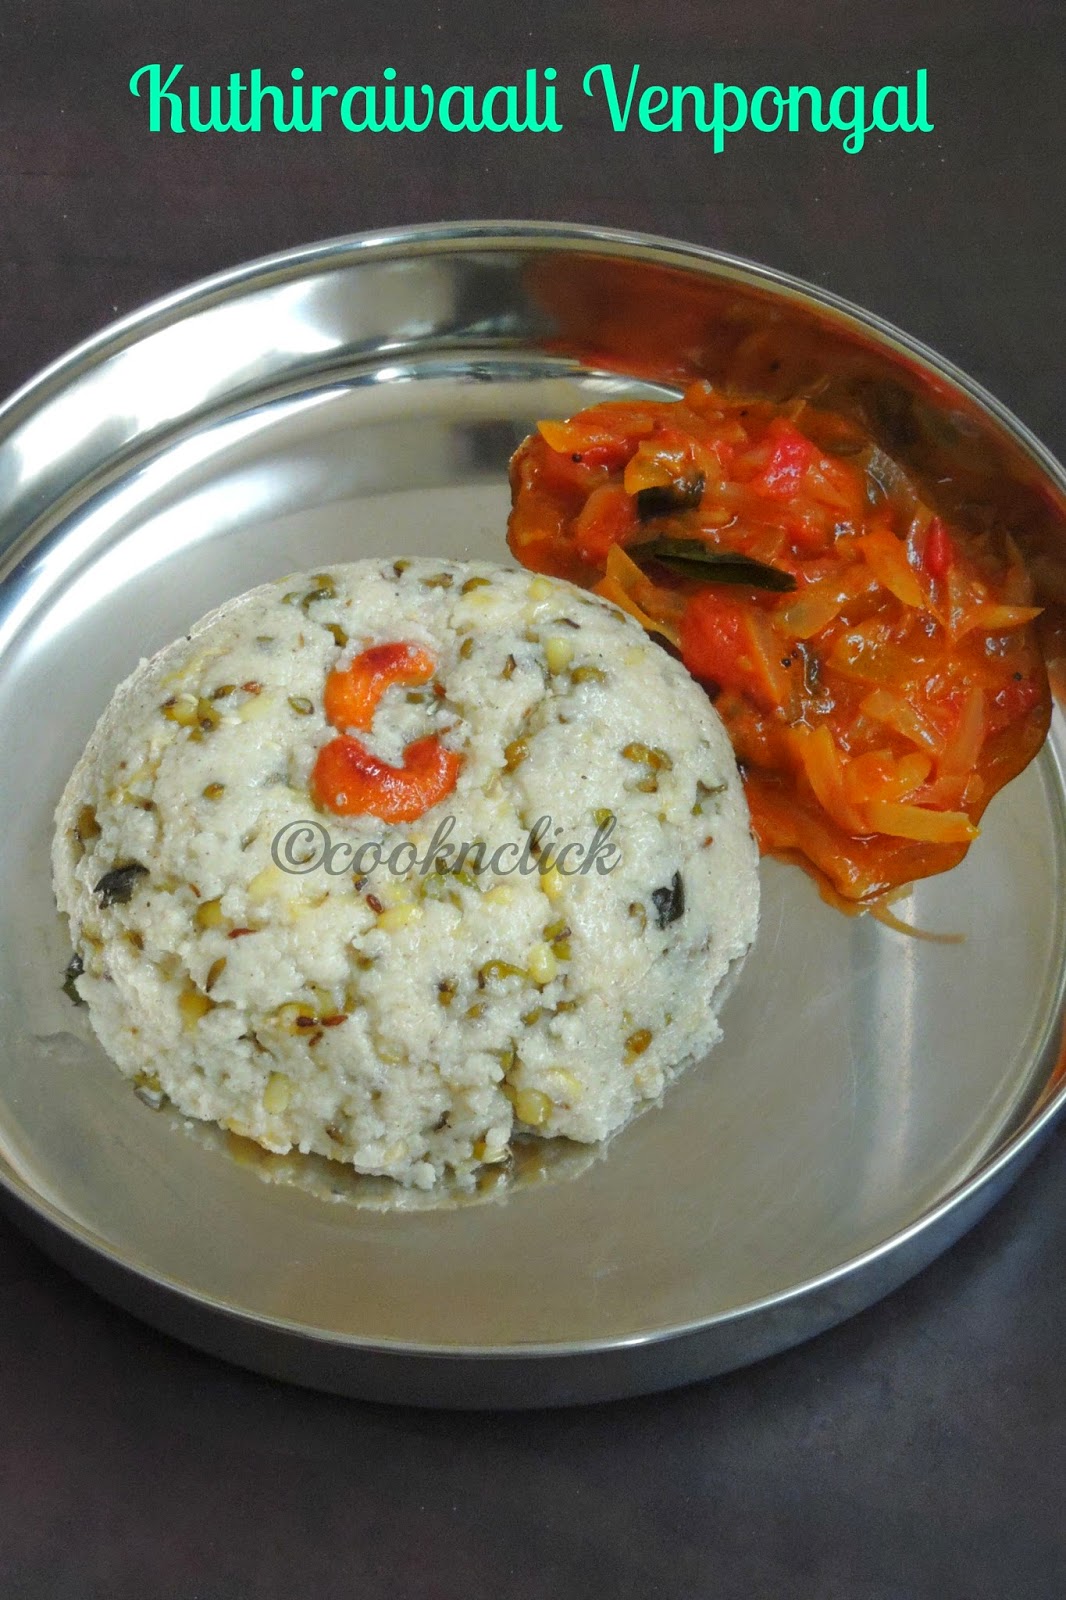 Kuthiraivalli venpongal, Kuthiravaali Mulaikattina Payaru Pongal, Baryard Millet & sprouted green gram pongal